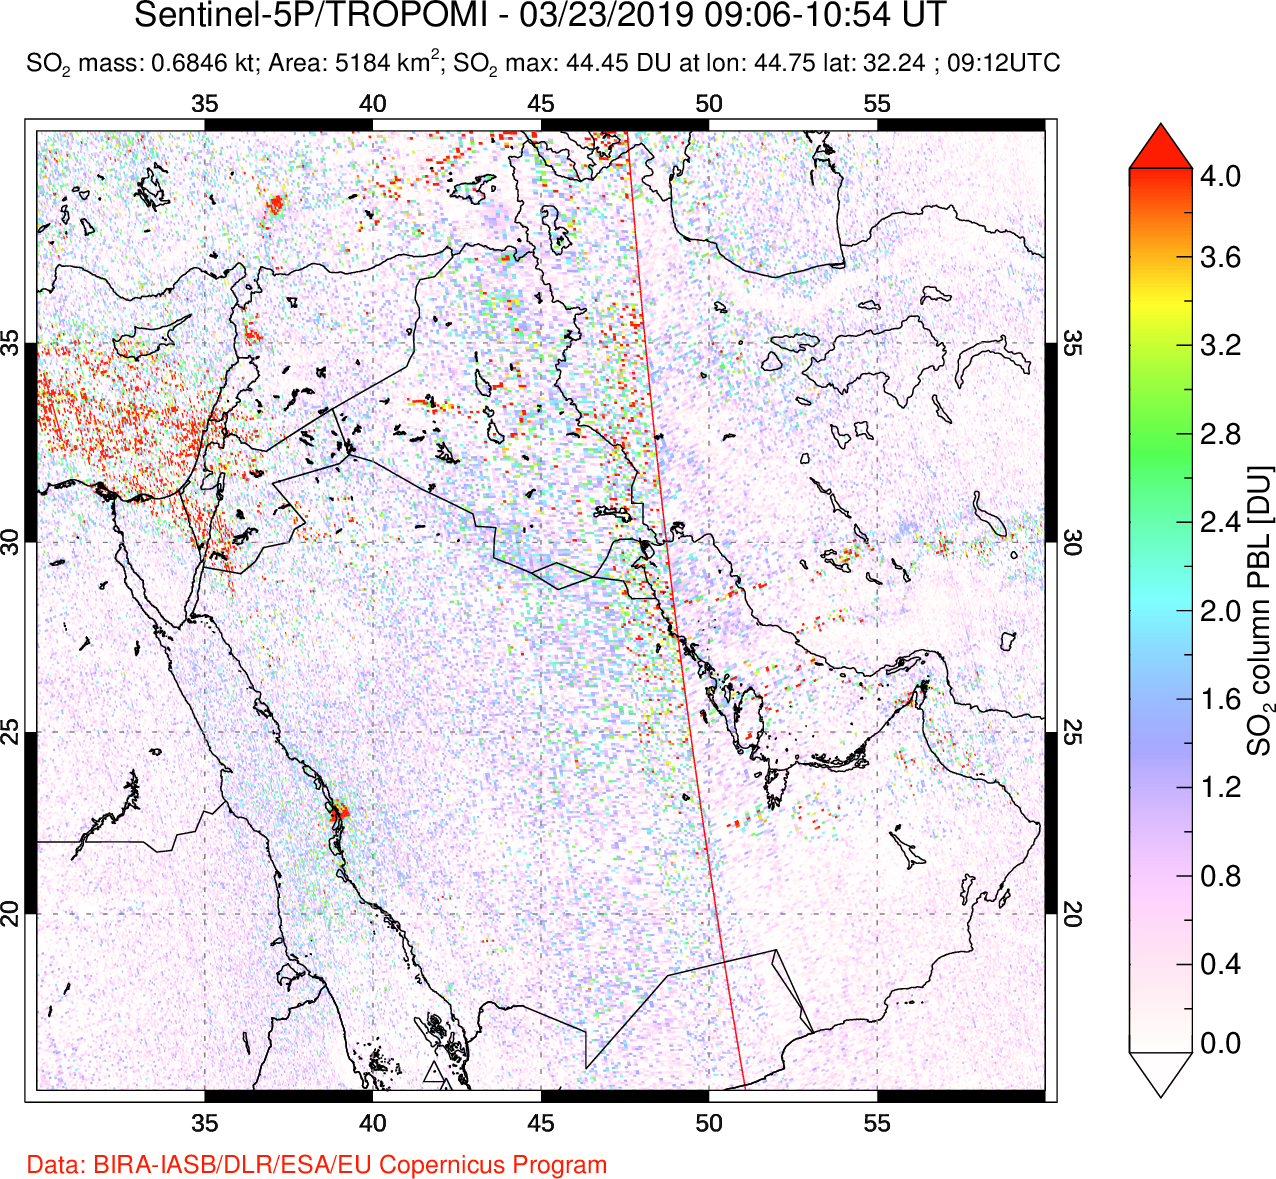 A sulfur dioxide image over Middle East on Mar 23, 2019.